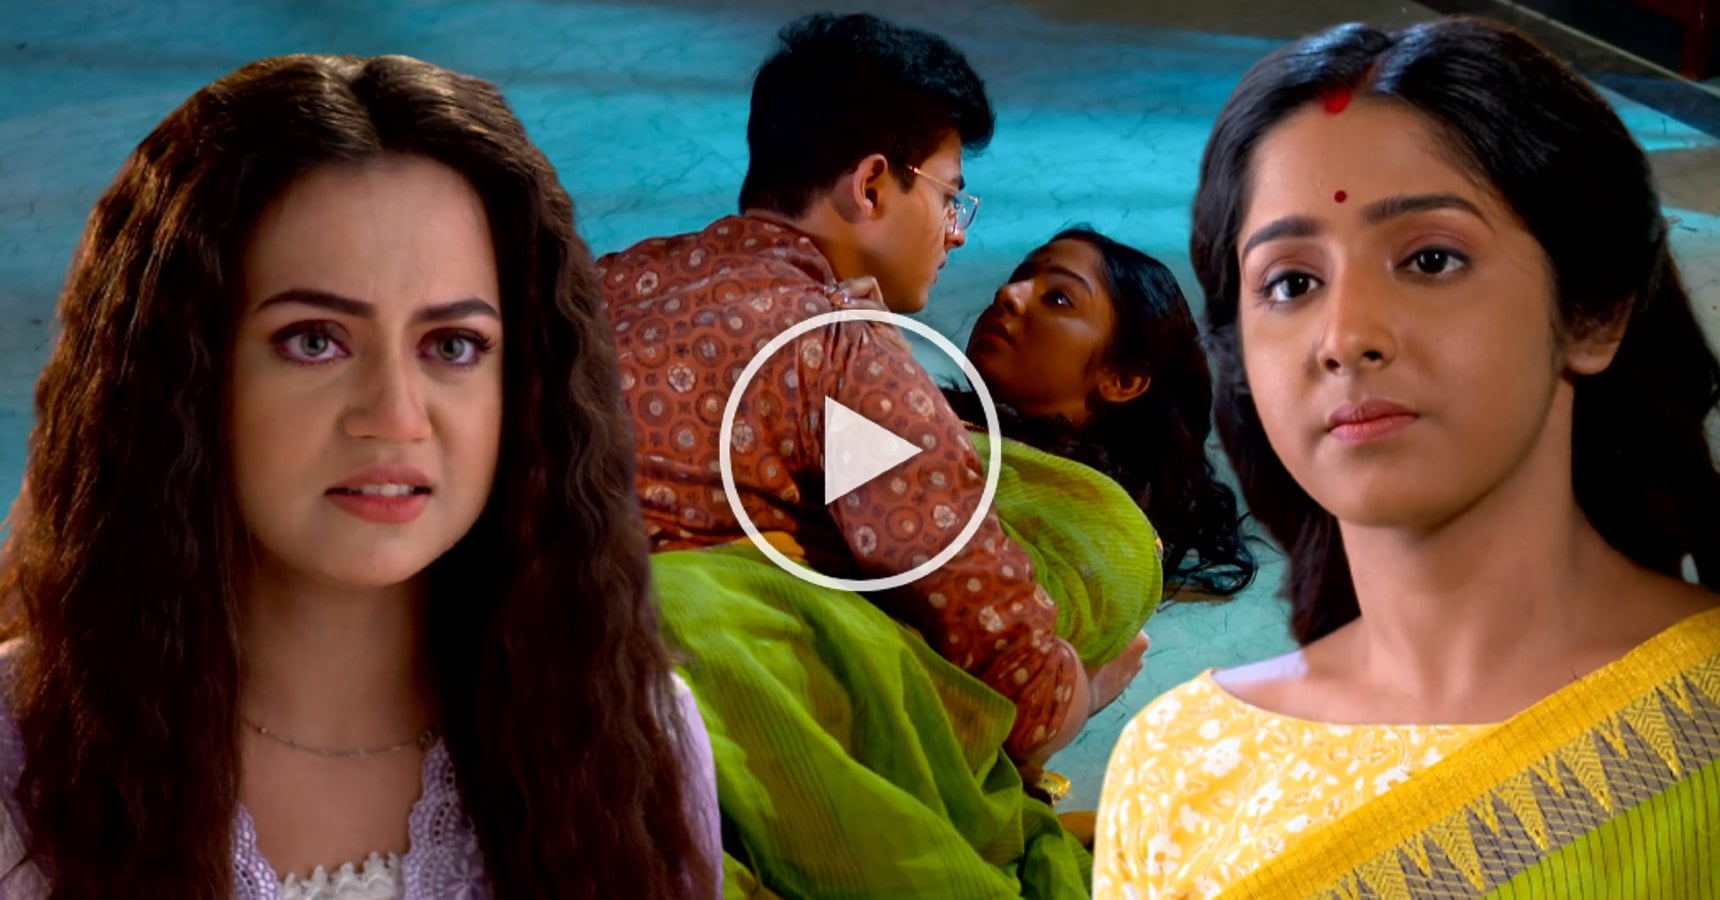 Anurager Chowa Suja Deepa Falls on Floor together romantic promo video